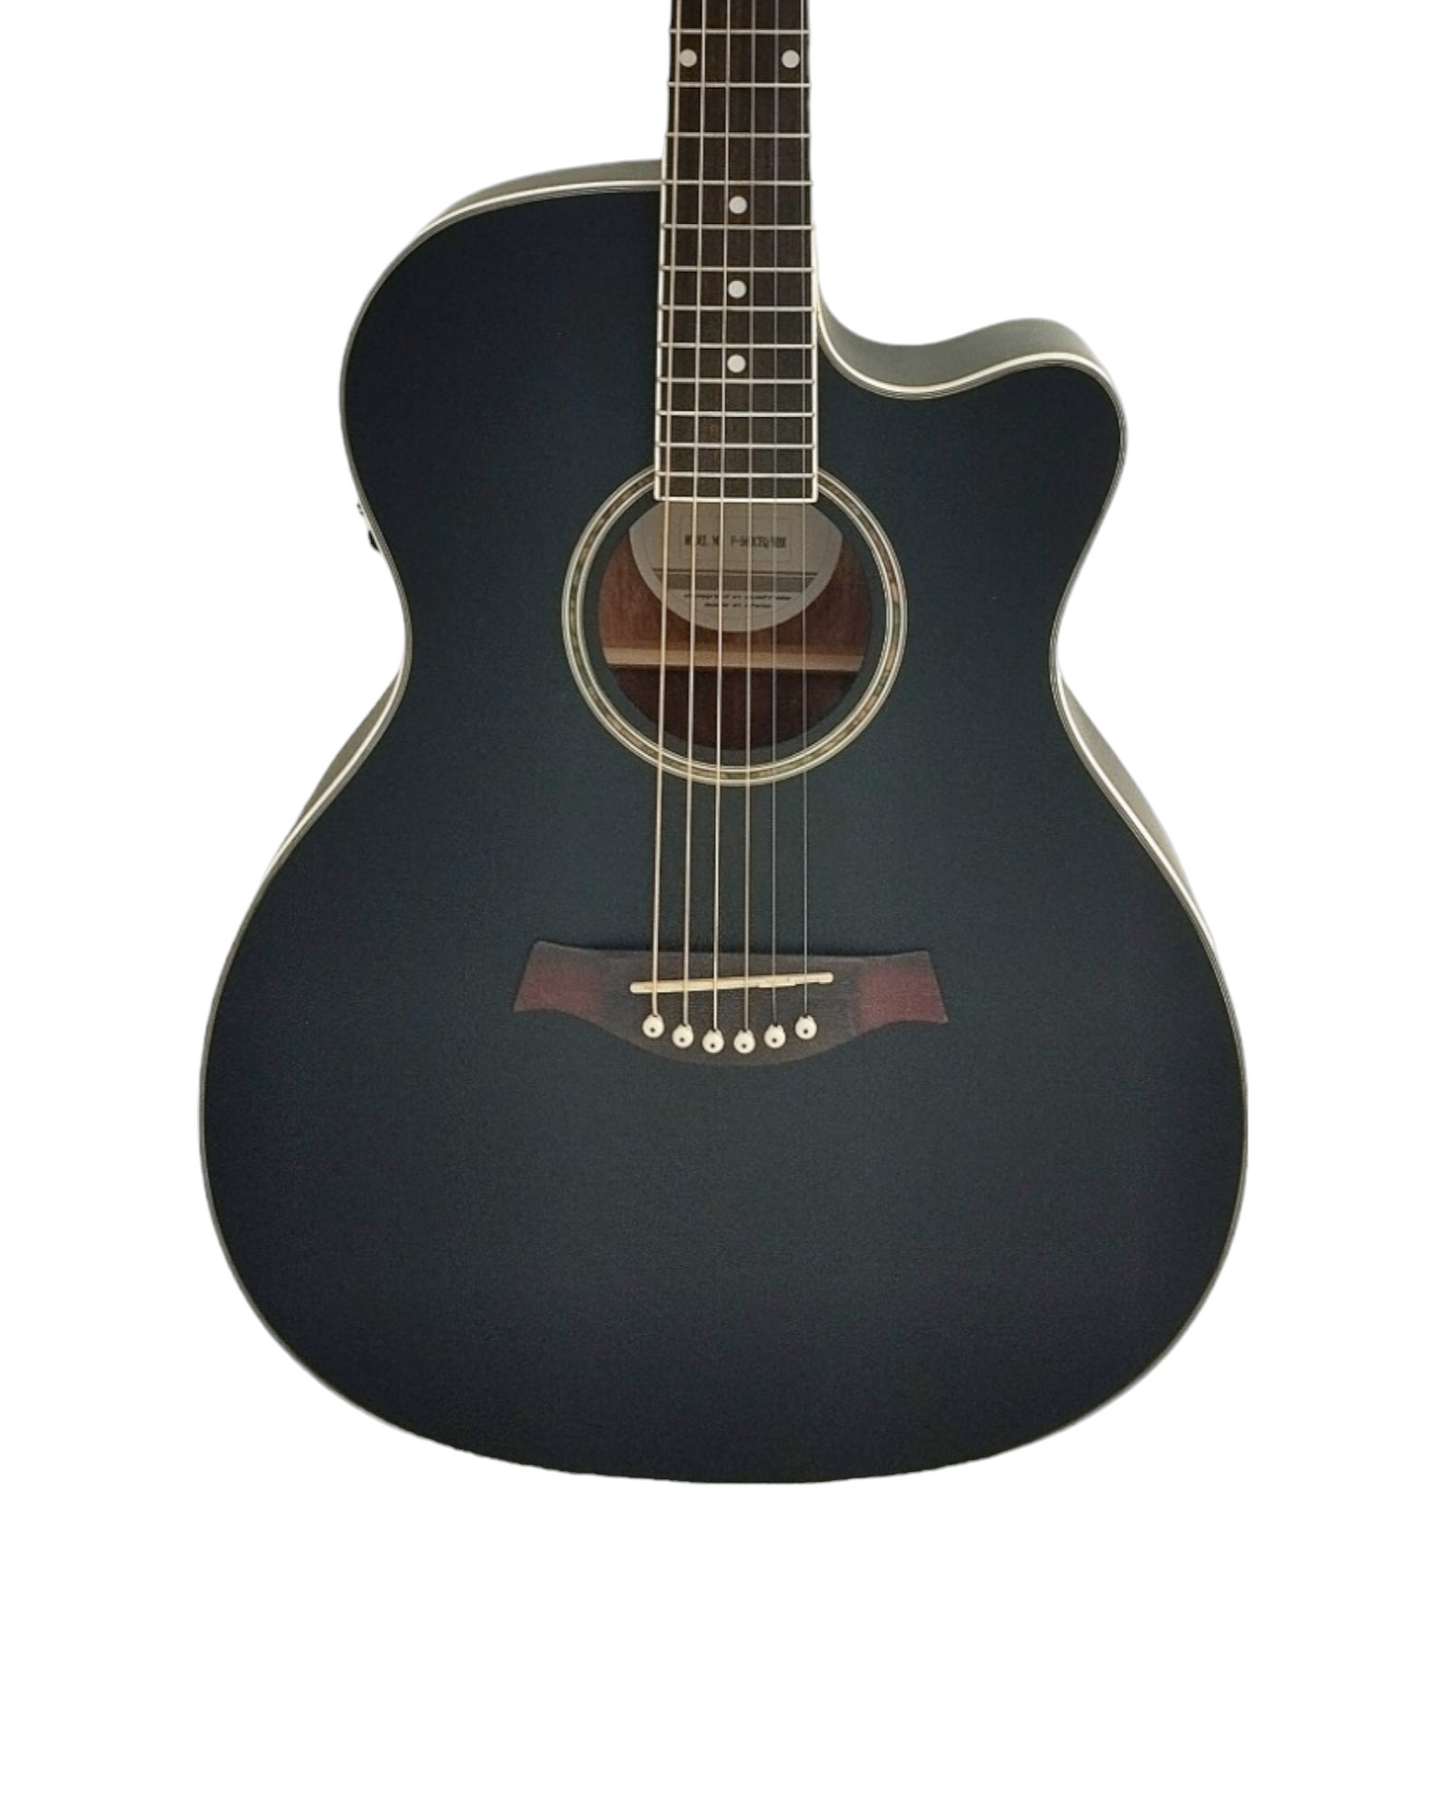 Haze Spruce Top Built-In Pickup/Tuner OM Cutaway Acoustic Guitar - Black F560CEQMBK